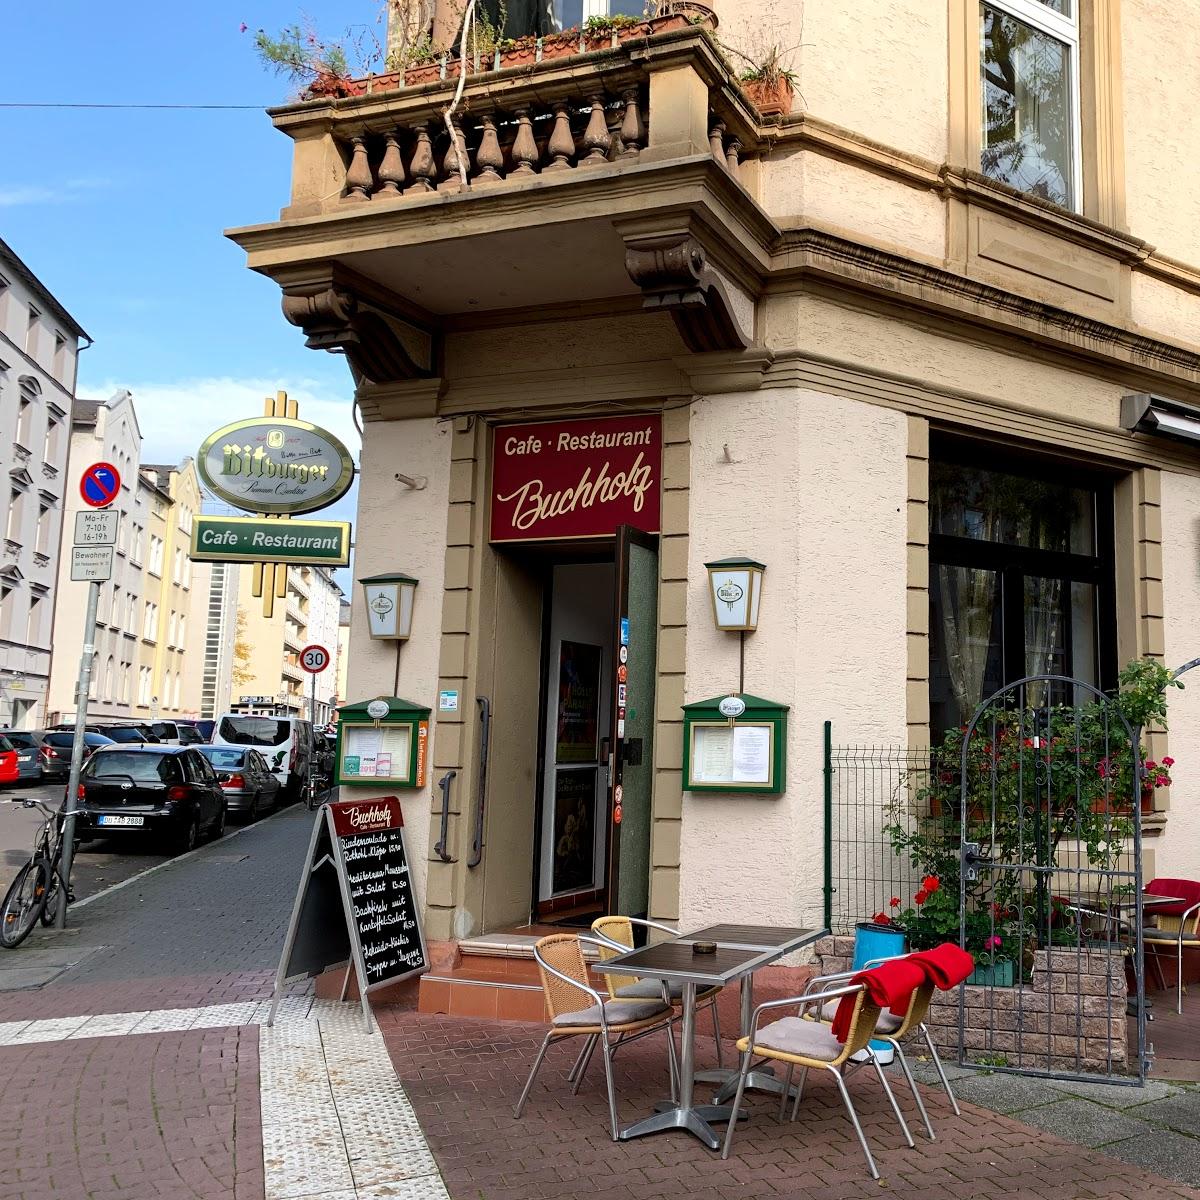 Restaurant "Restaurant Buchholz" in Frankfurt am Main